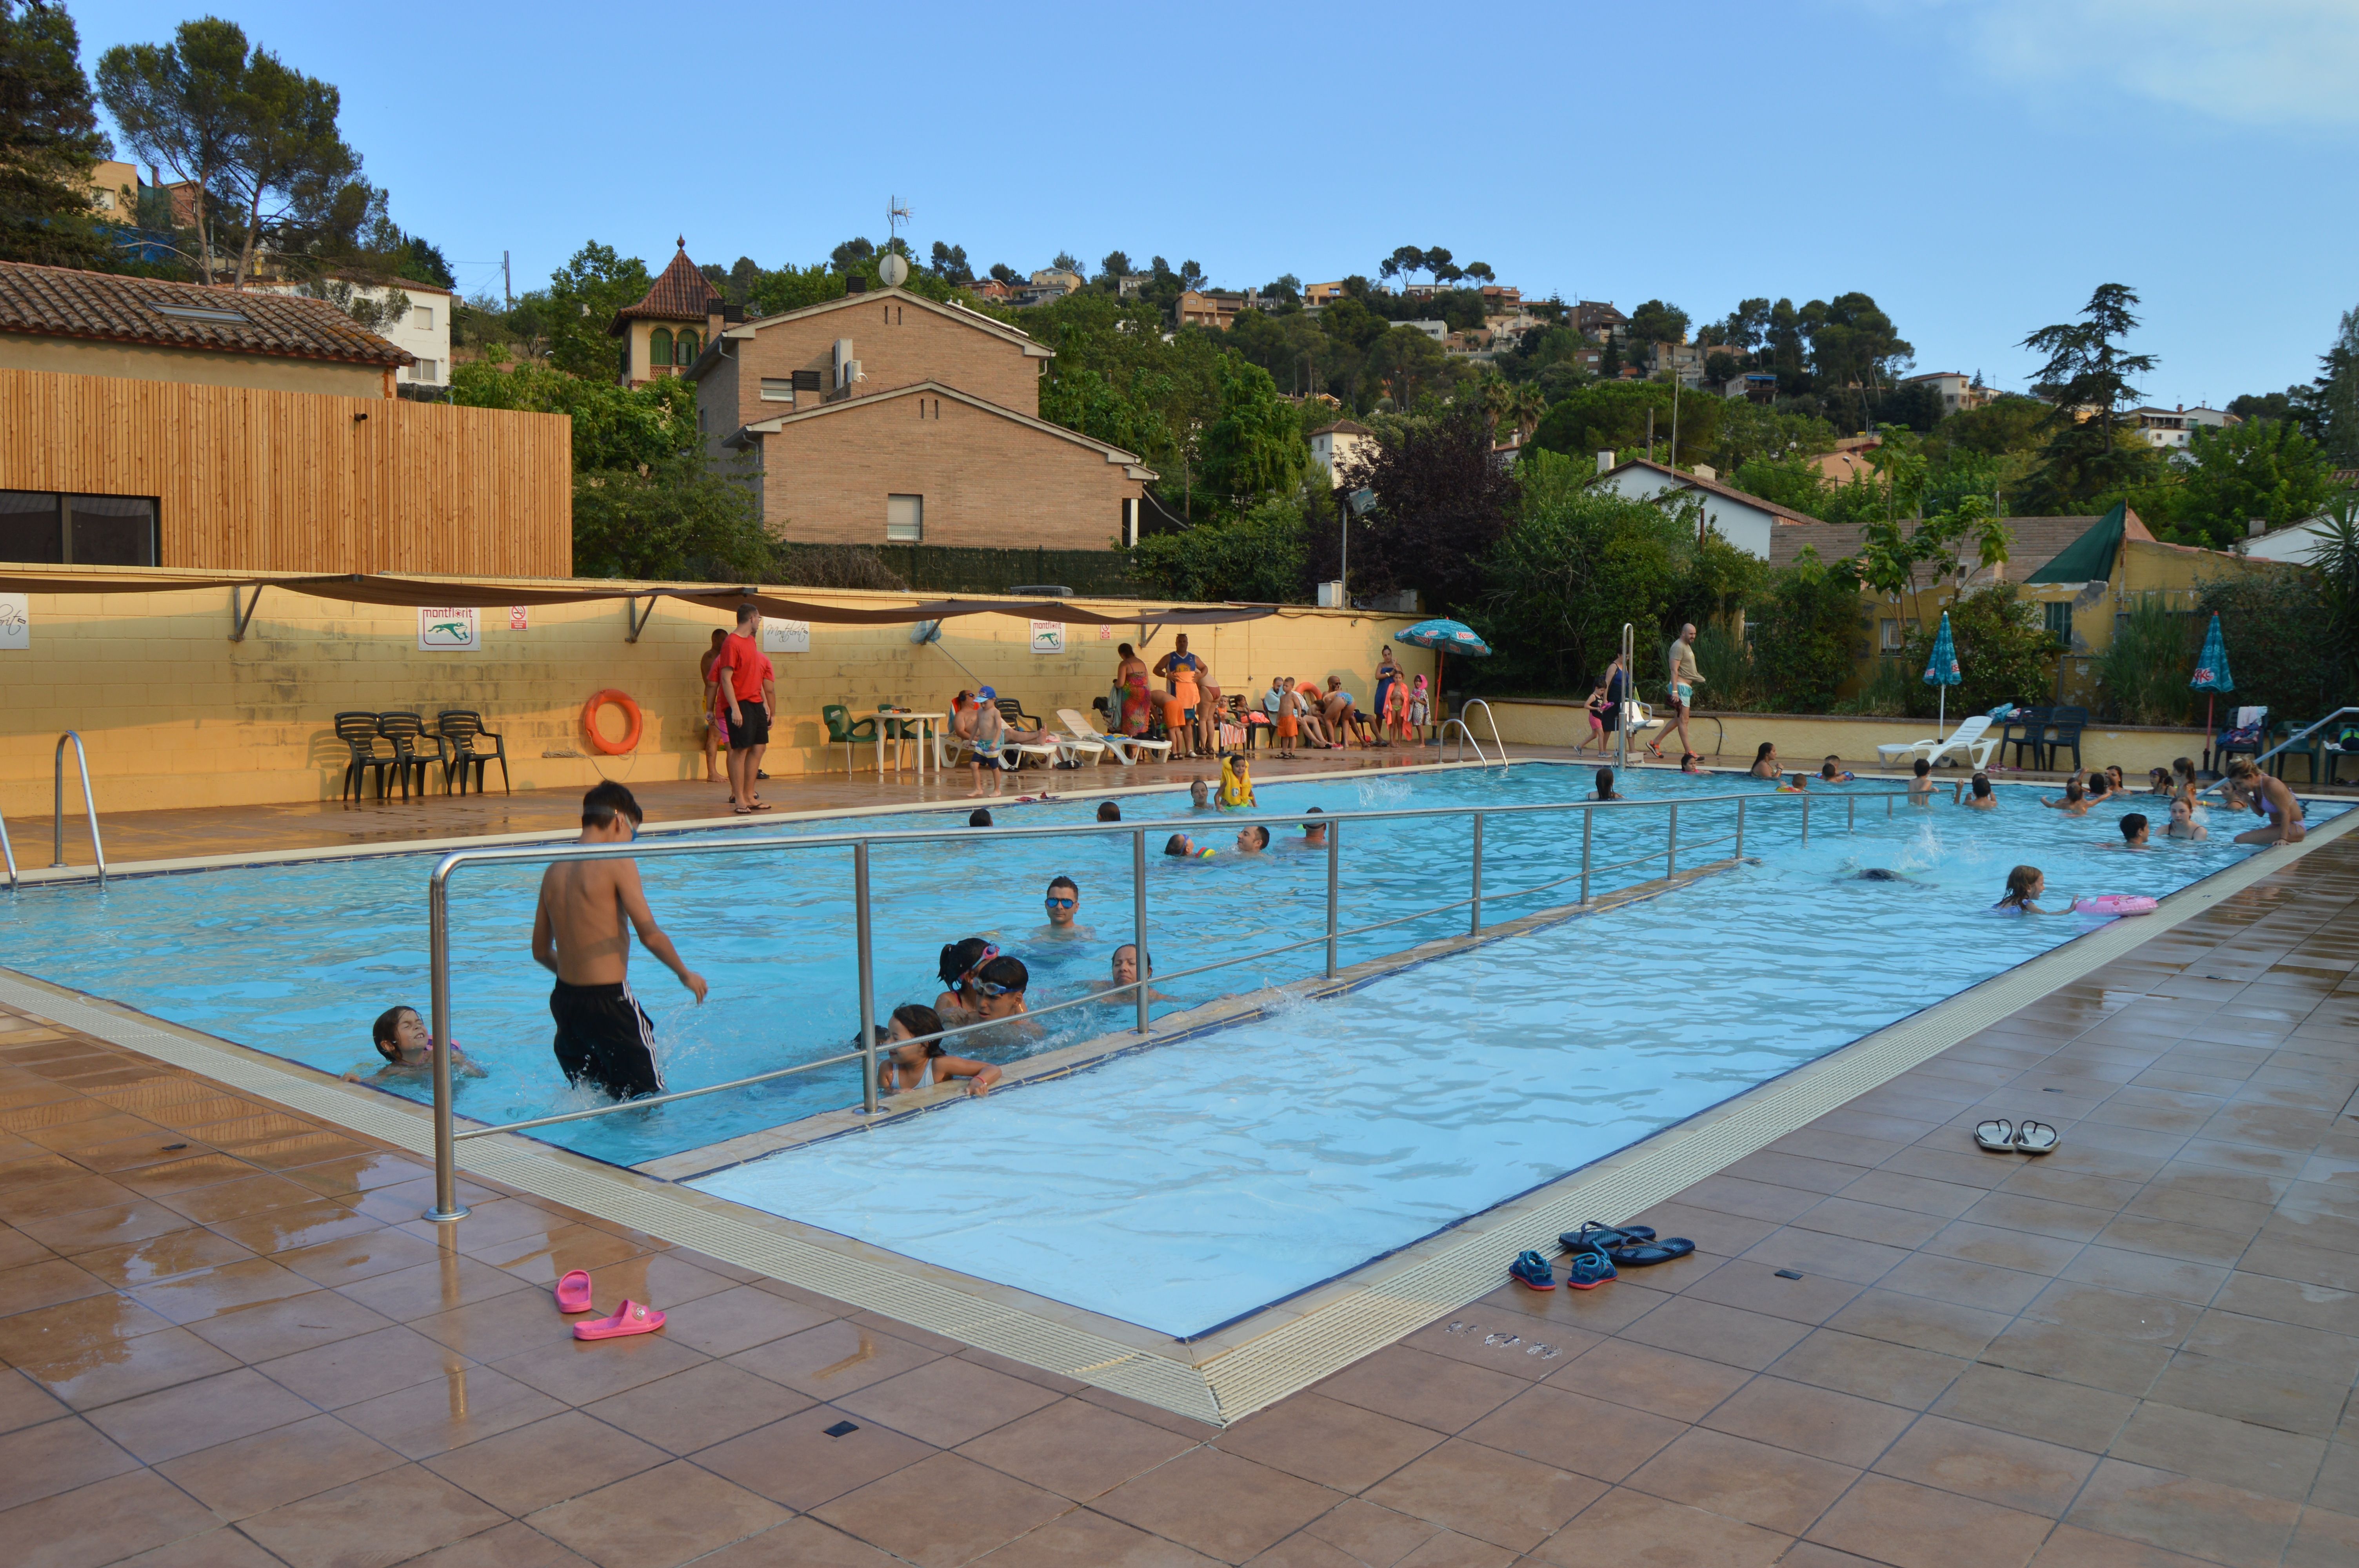 Refrescar-se a la piscina de Montflorit durant l'onada de calor a Cerdanyola. FOTO: Nora Muñoz Otero